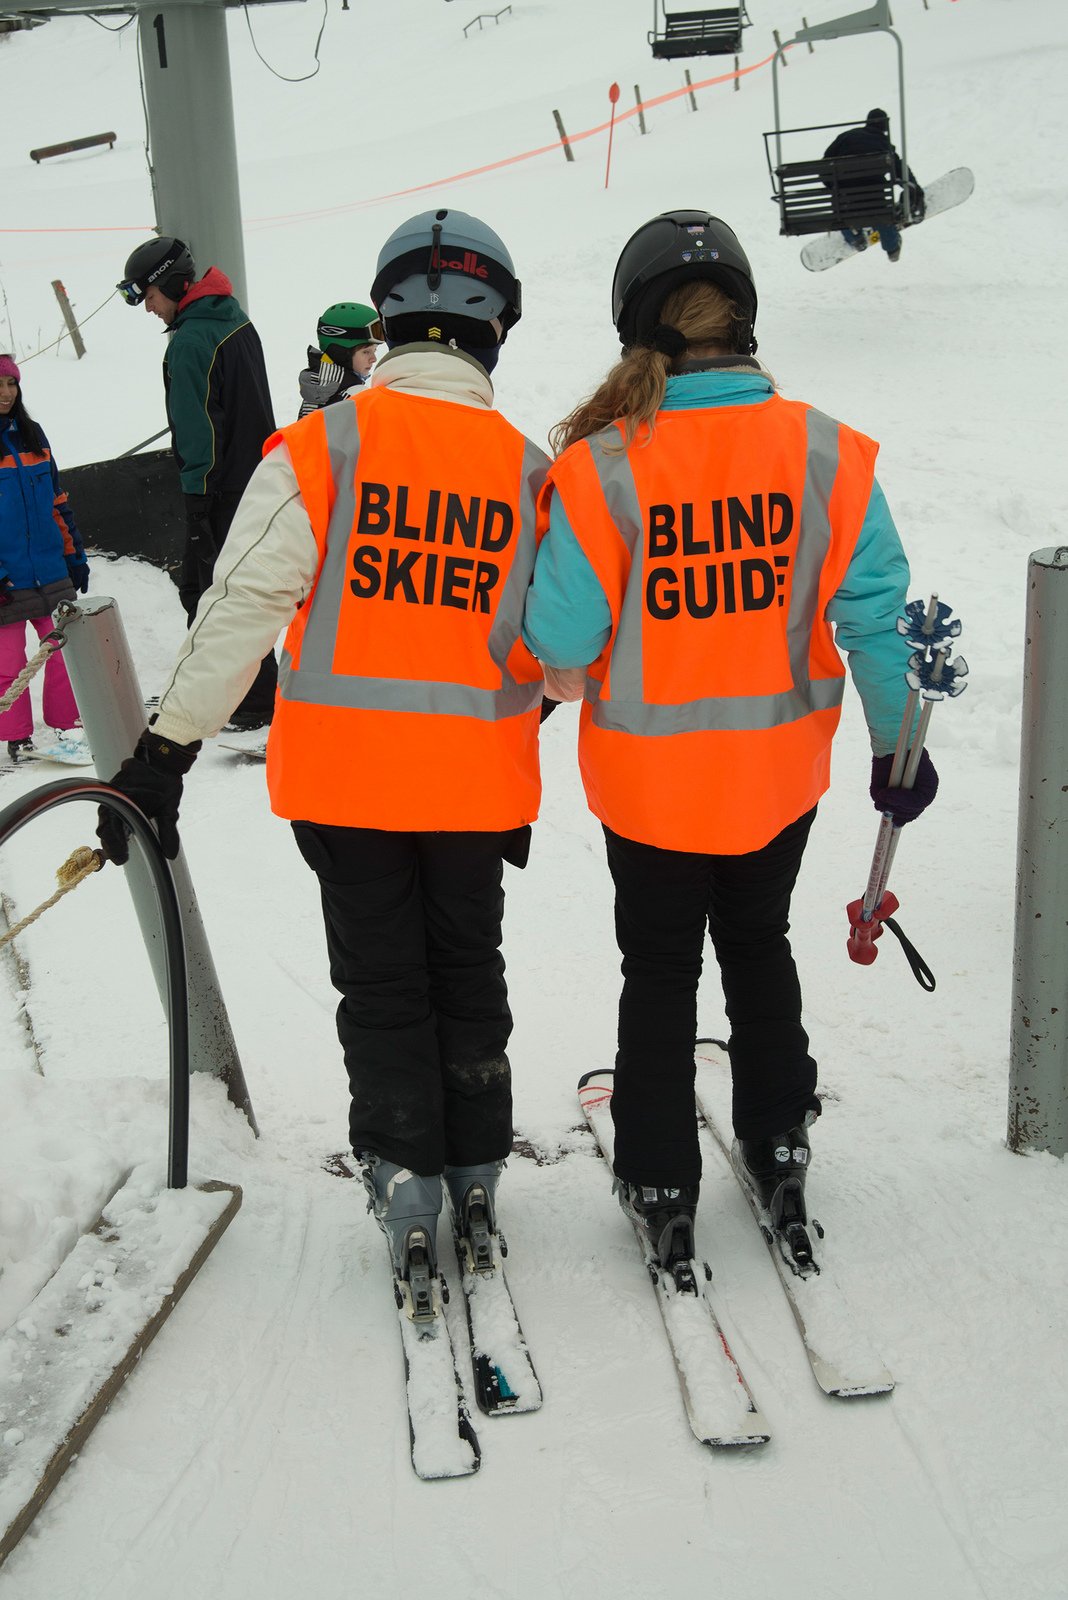 Blind guide helping blind skier onto ski lifts